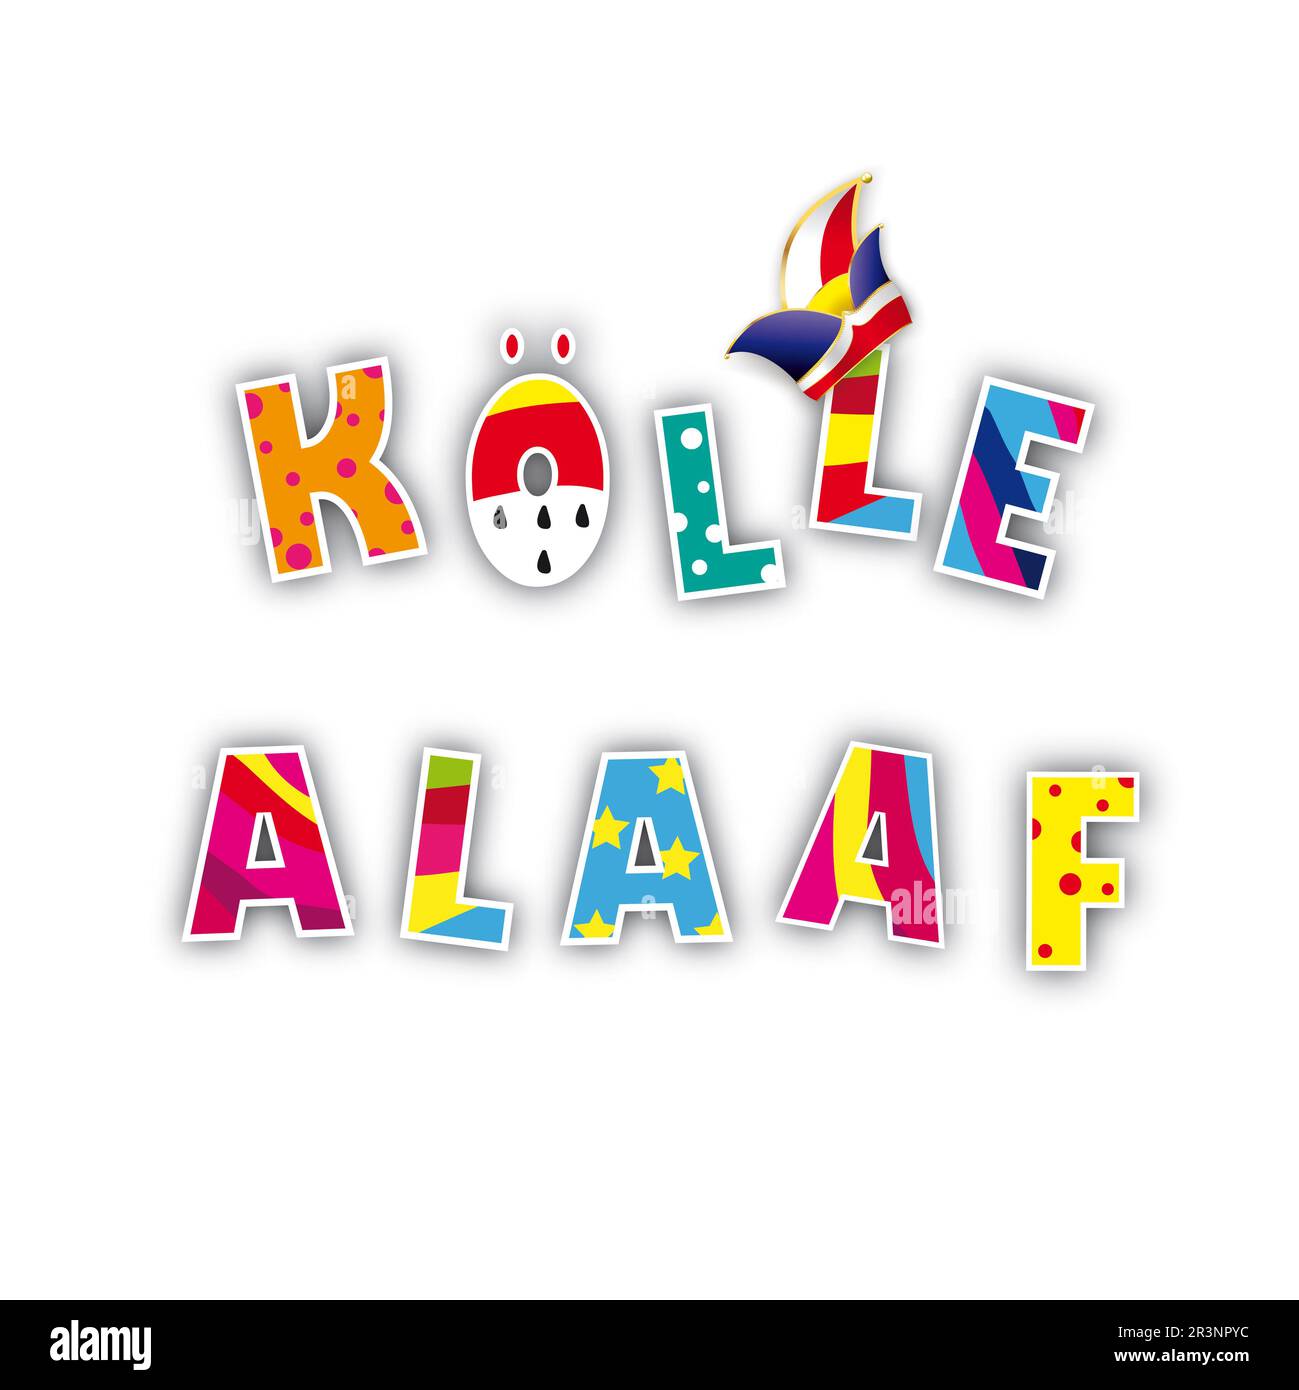 Koelle Alaaf Jesters Cap Stock Photo